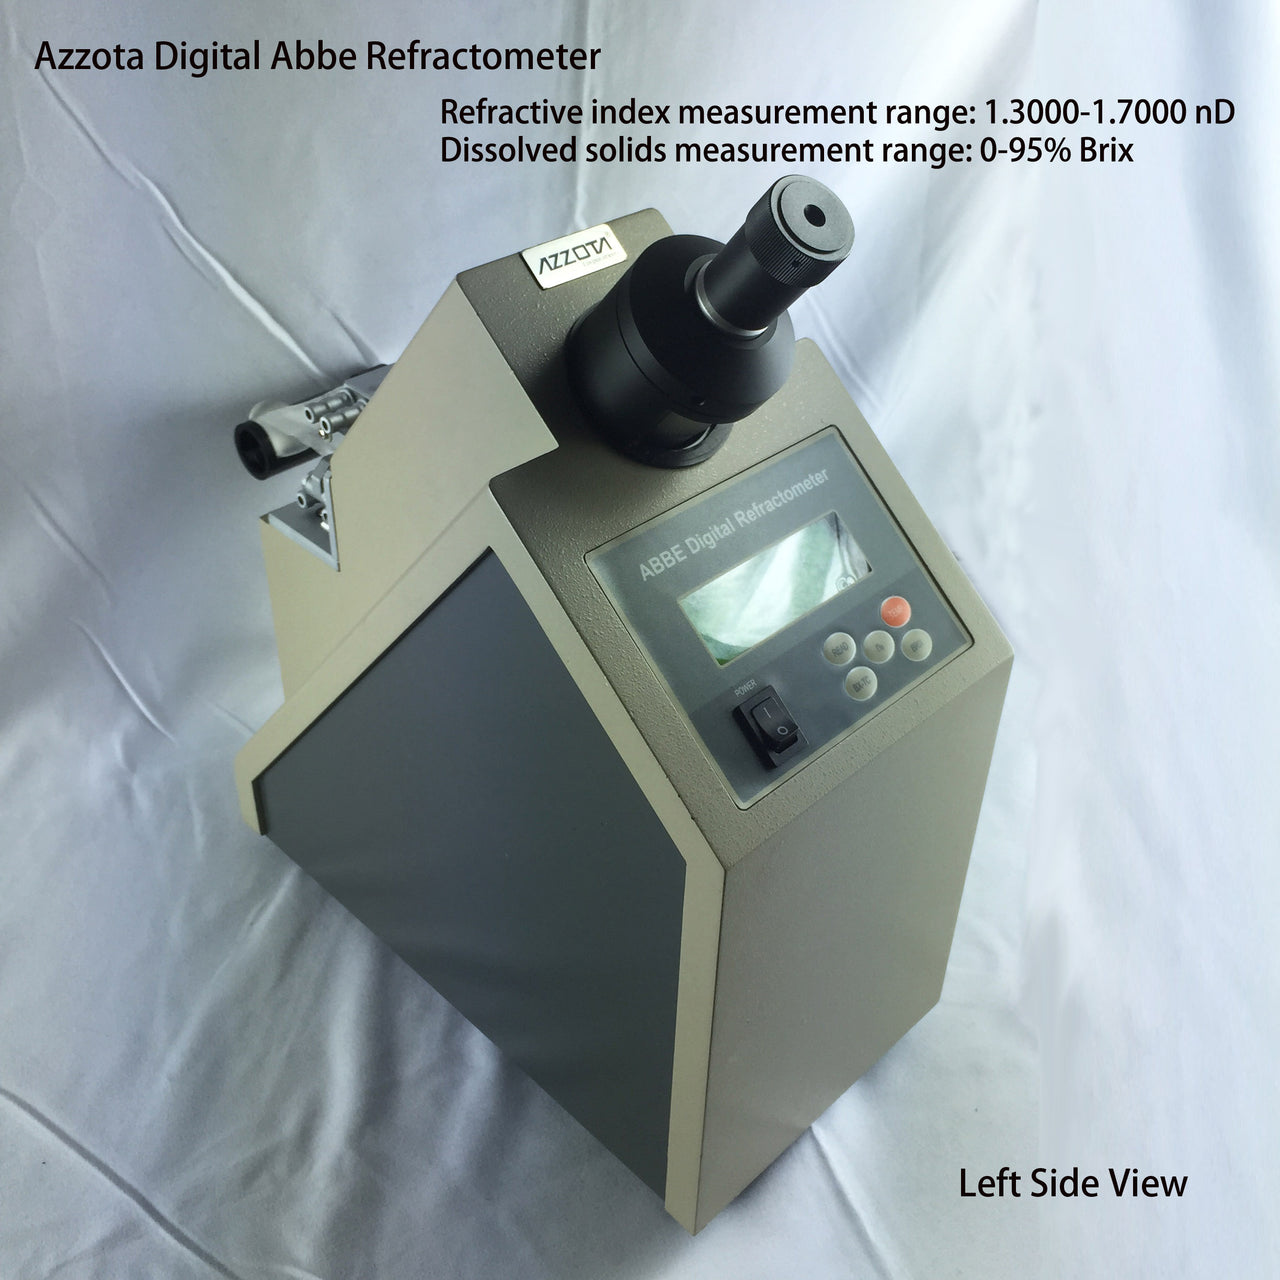 Azzota Digital Abbe Refractometer with refractive index measurement range: 1.3000-1.7000 nD